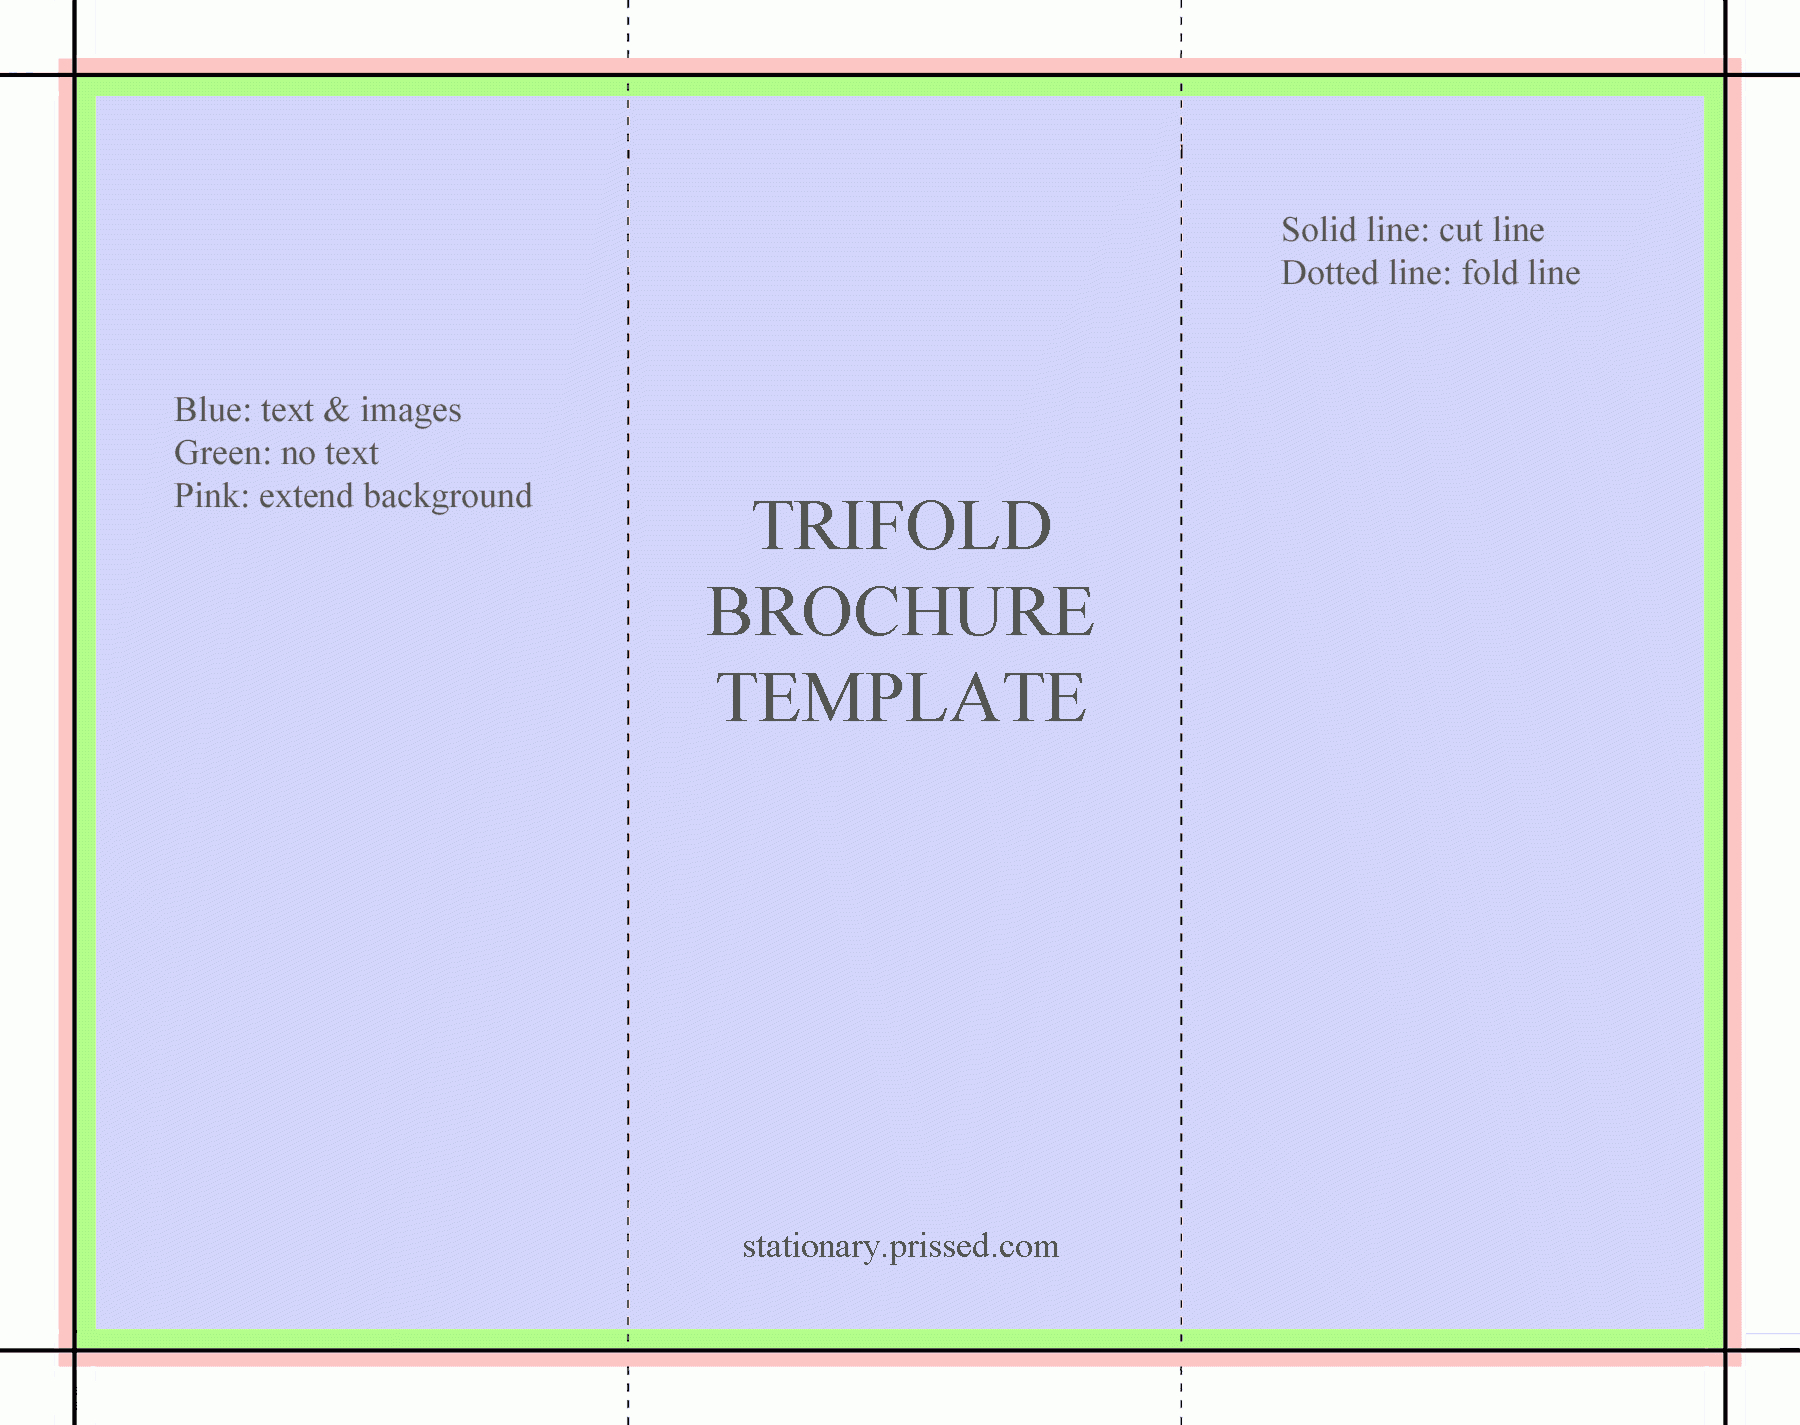 Free Online Brochure Templates | Free Blank Templates For Intended For 6 Sided Brochure Template